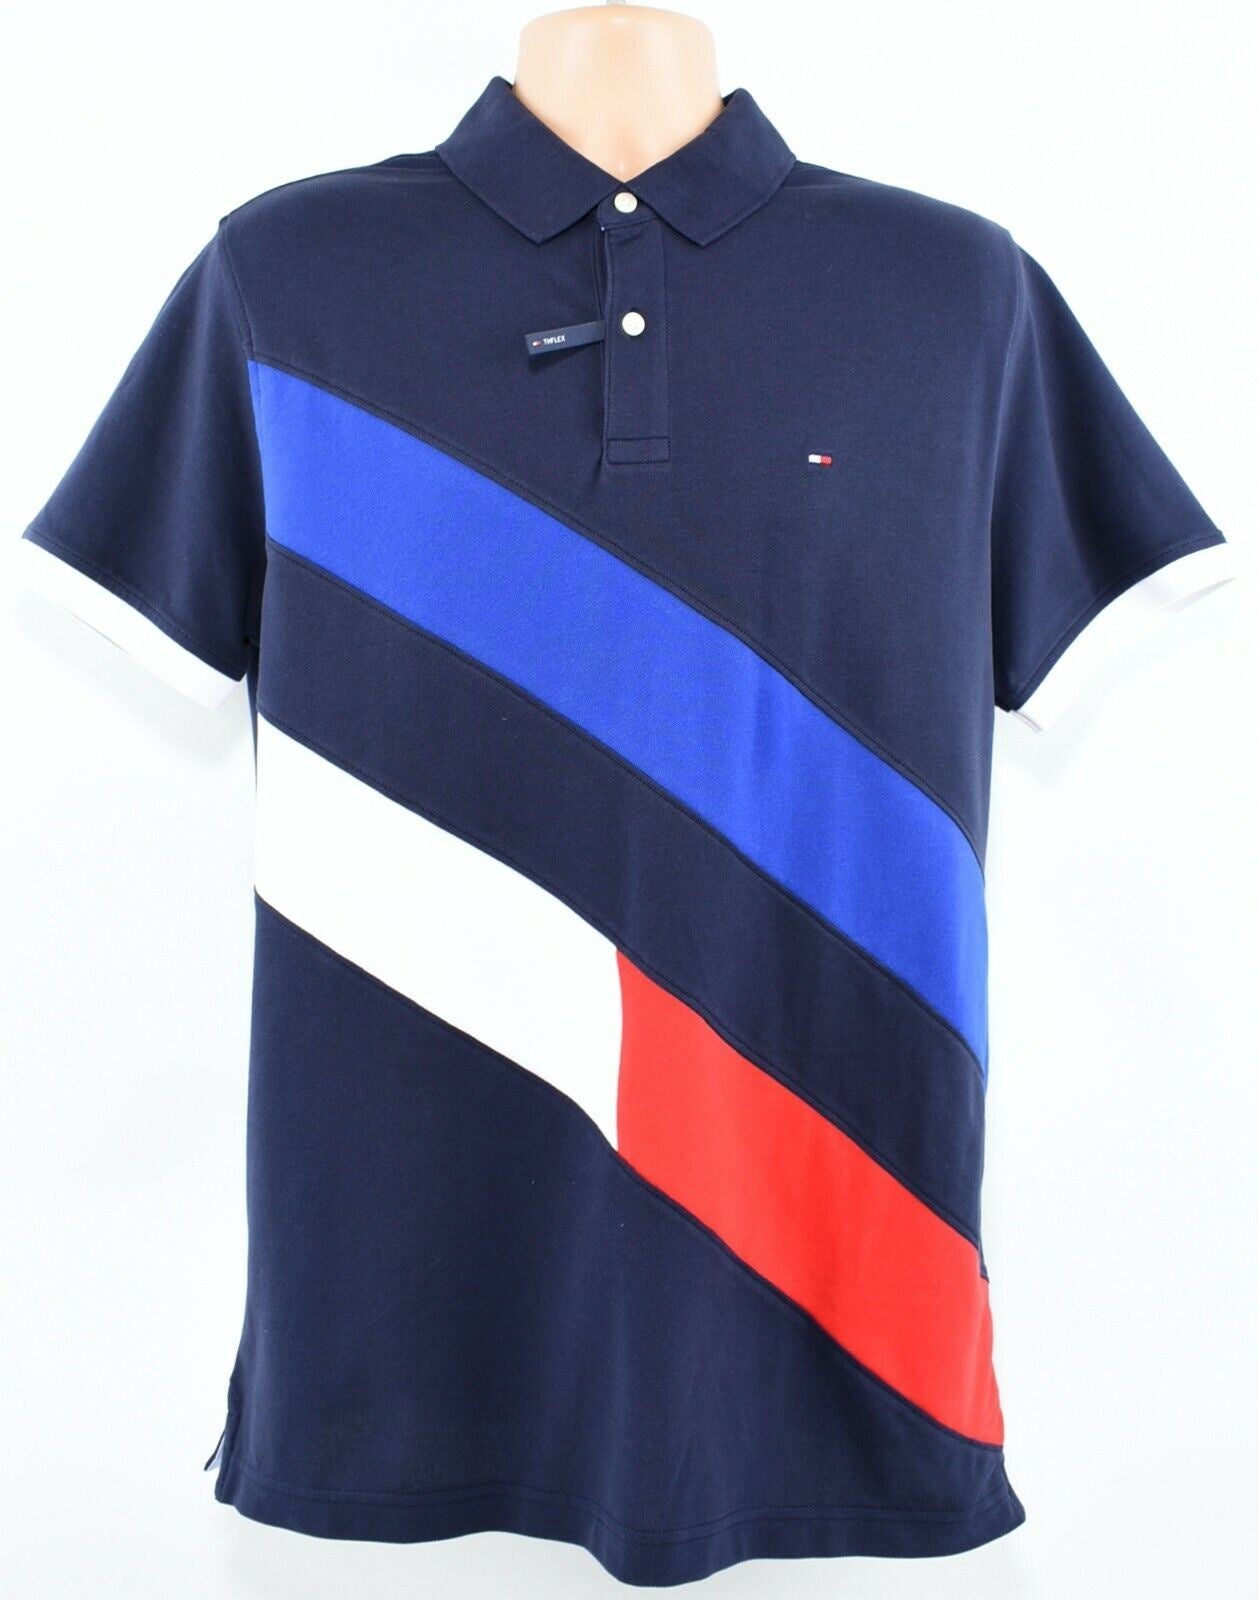 TOMMY HILFIGER Men's TH-flex Polo Shirt, Navy Blue, size S